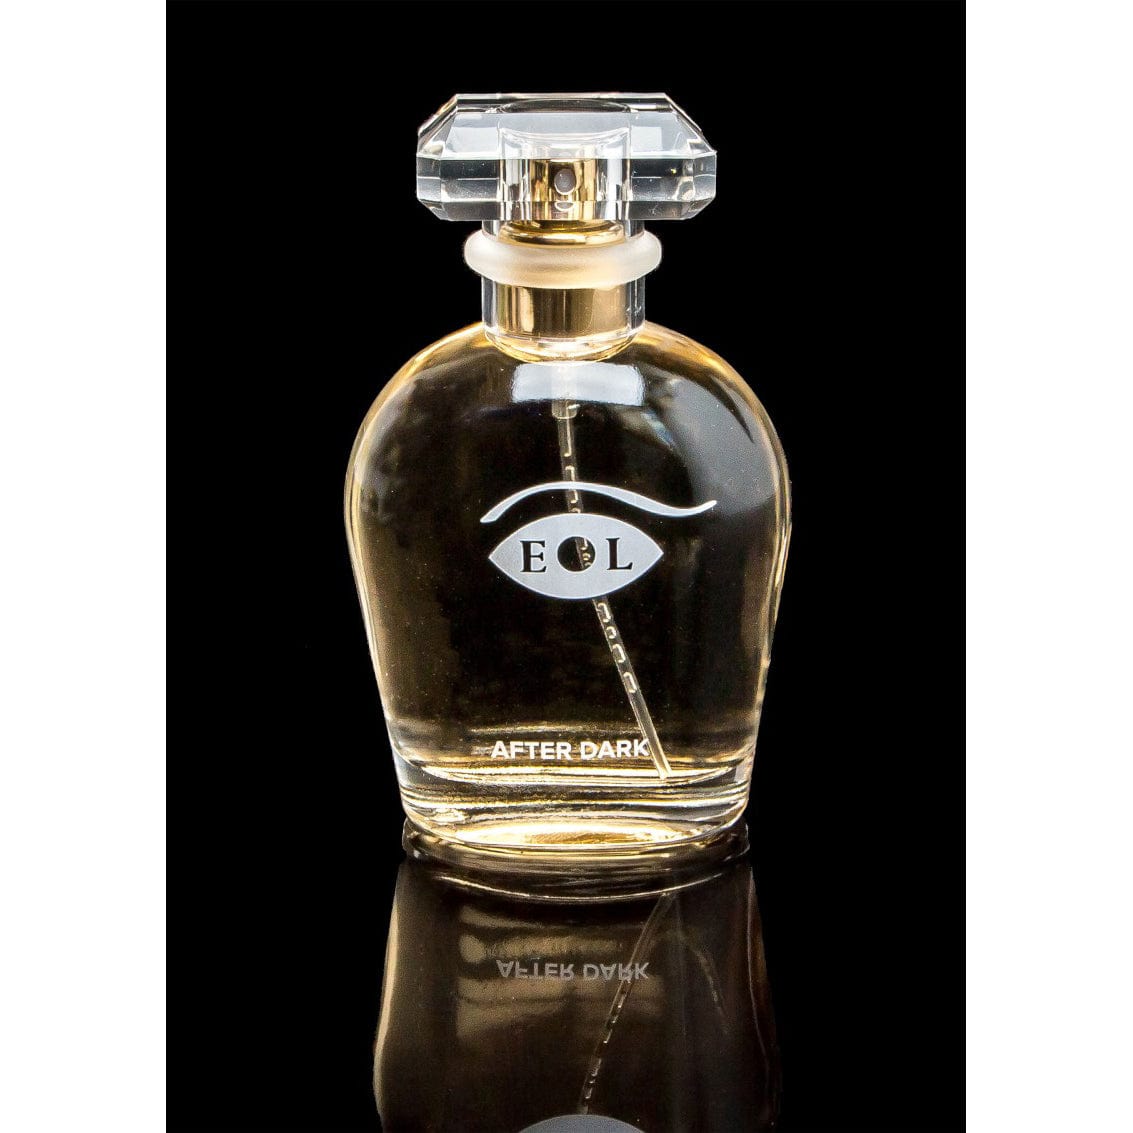 Eye of Love -  After Dark Pheromone Perfume Spray For Her 50ml -  Pheromones  Durio.sg